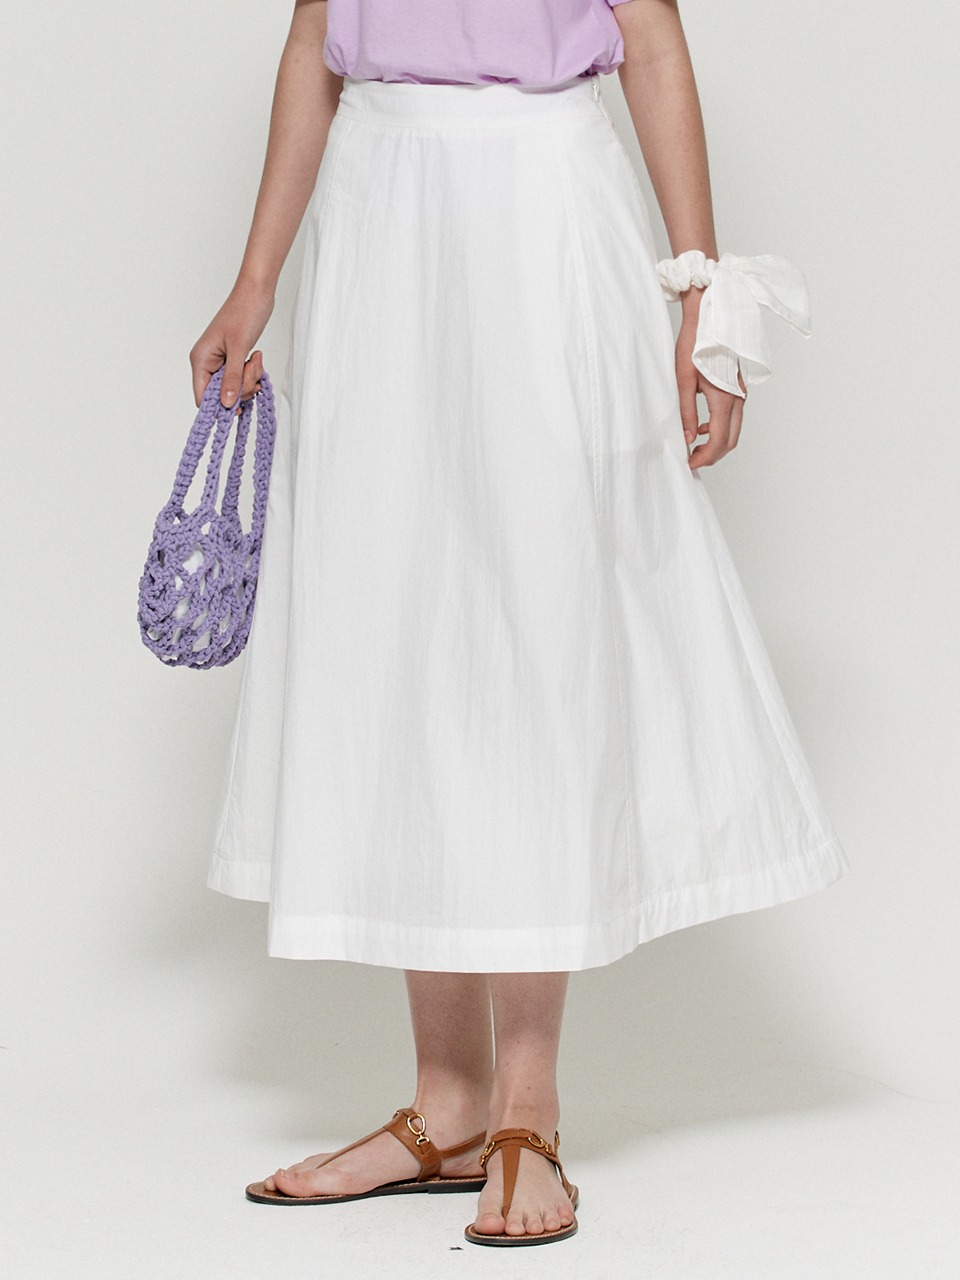 [REFURB SALE] Semi-flare A line skirt - Warm white